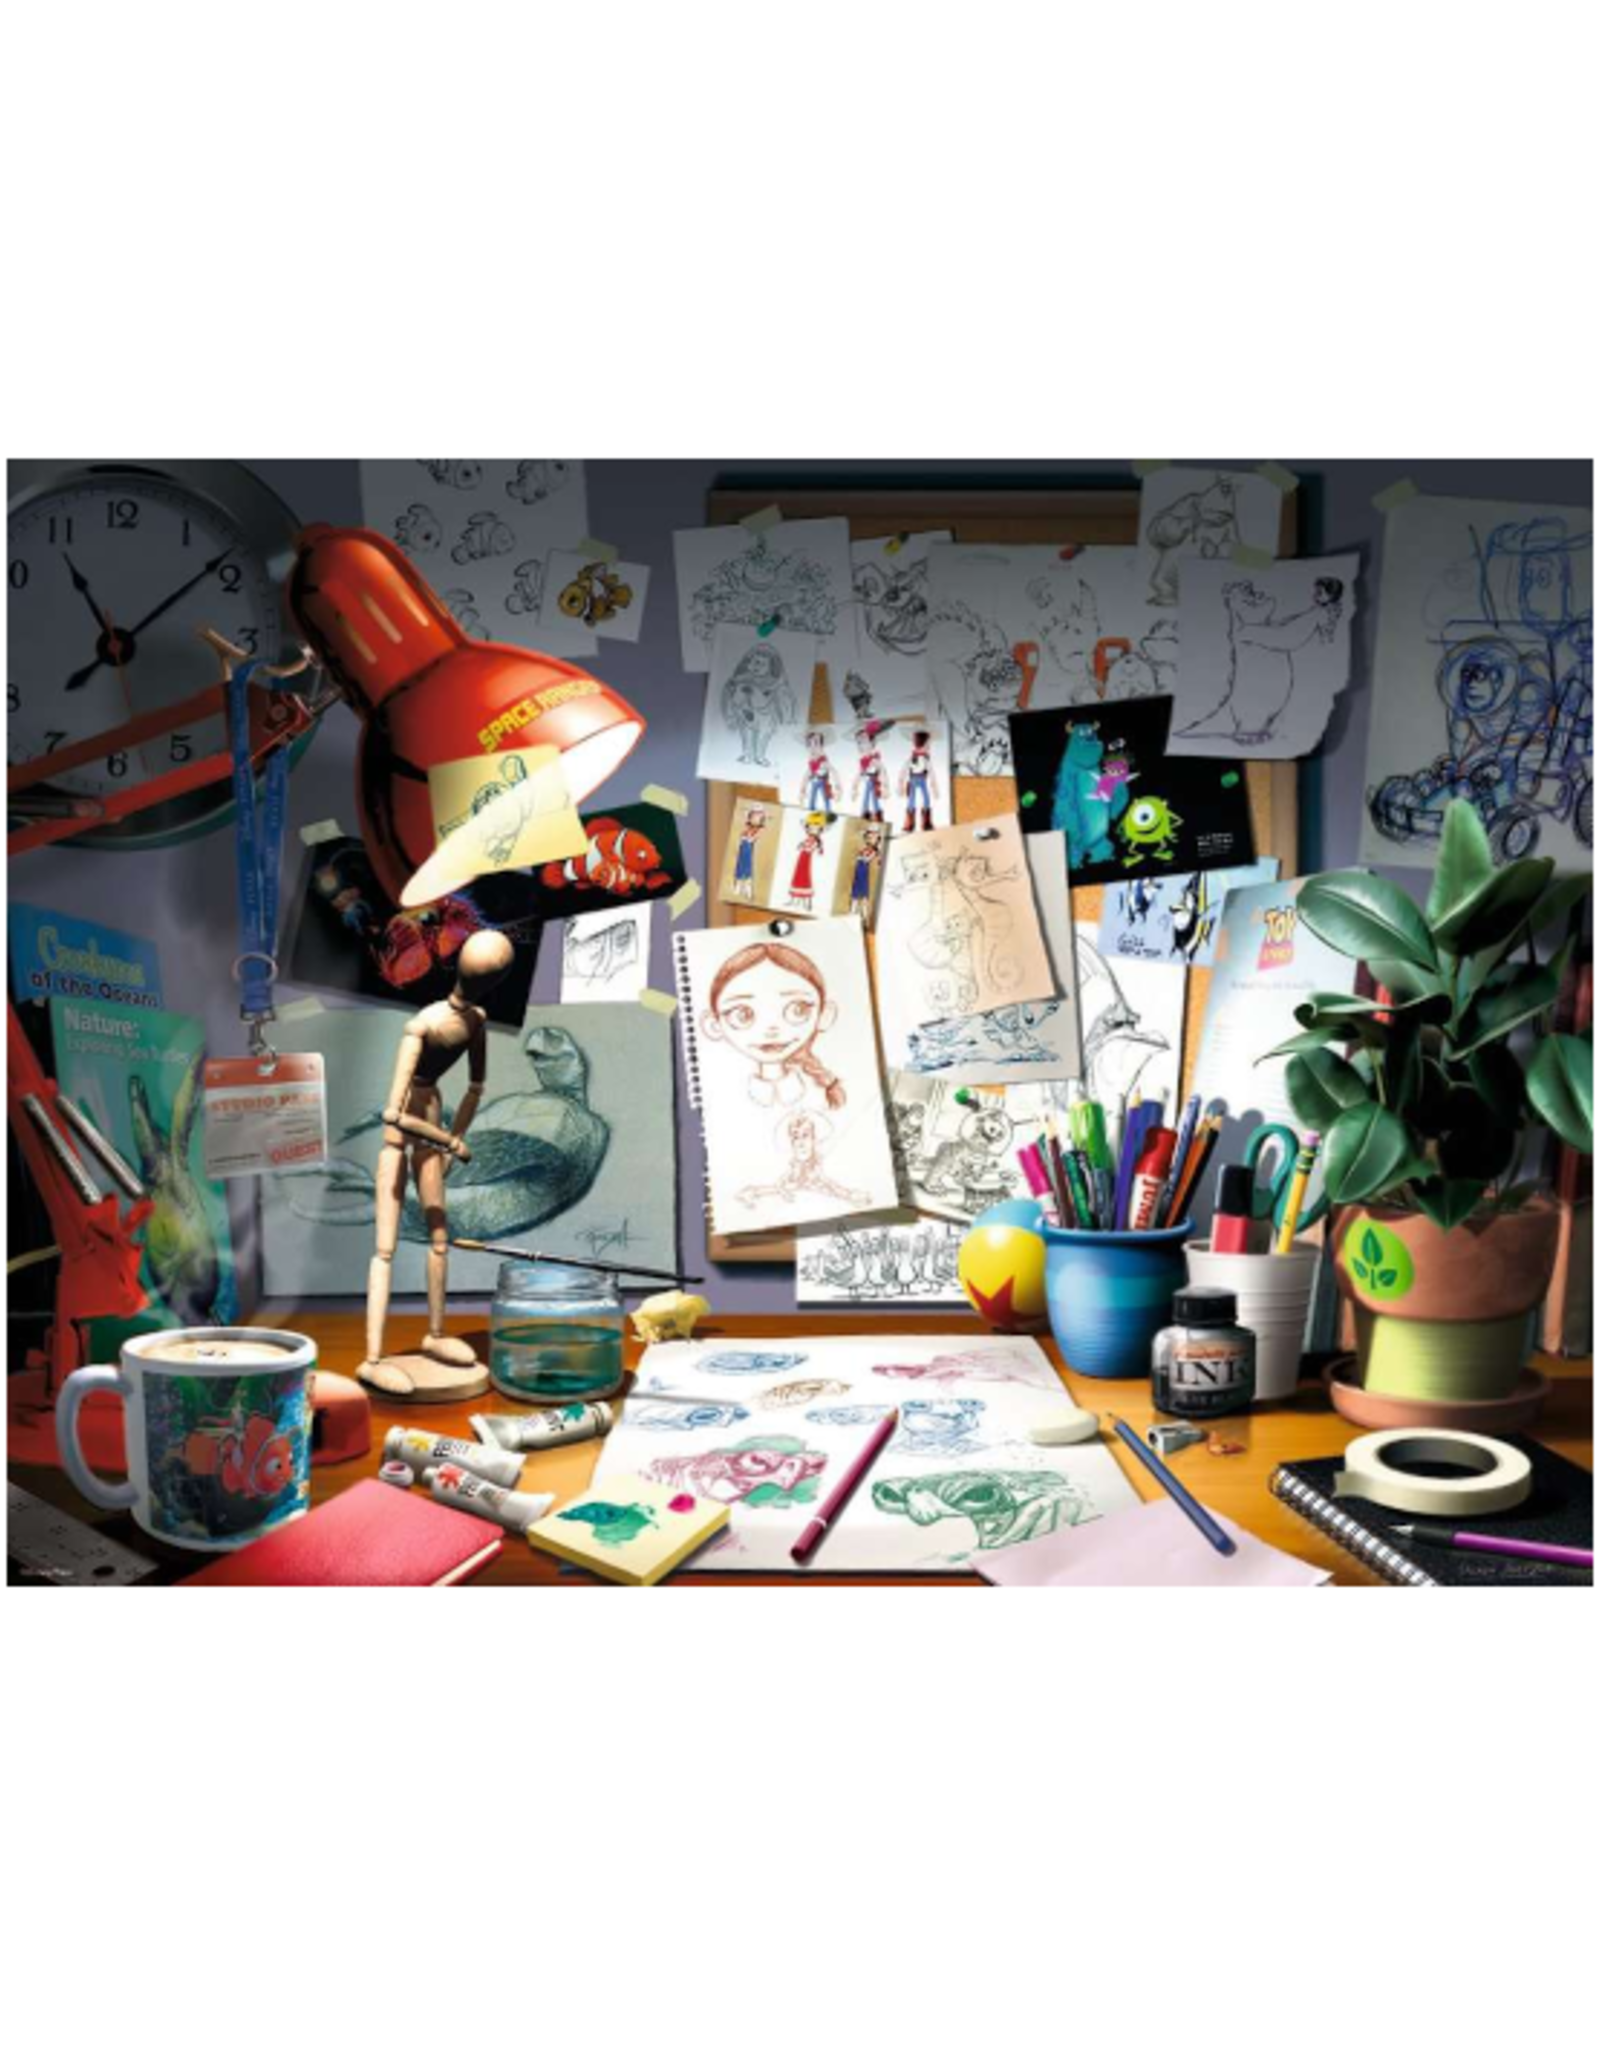 Ravensburger Ravensburger - 1000 pcs - Disney: The Artists Desk